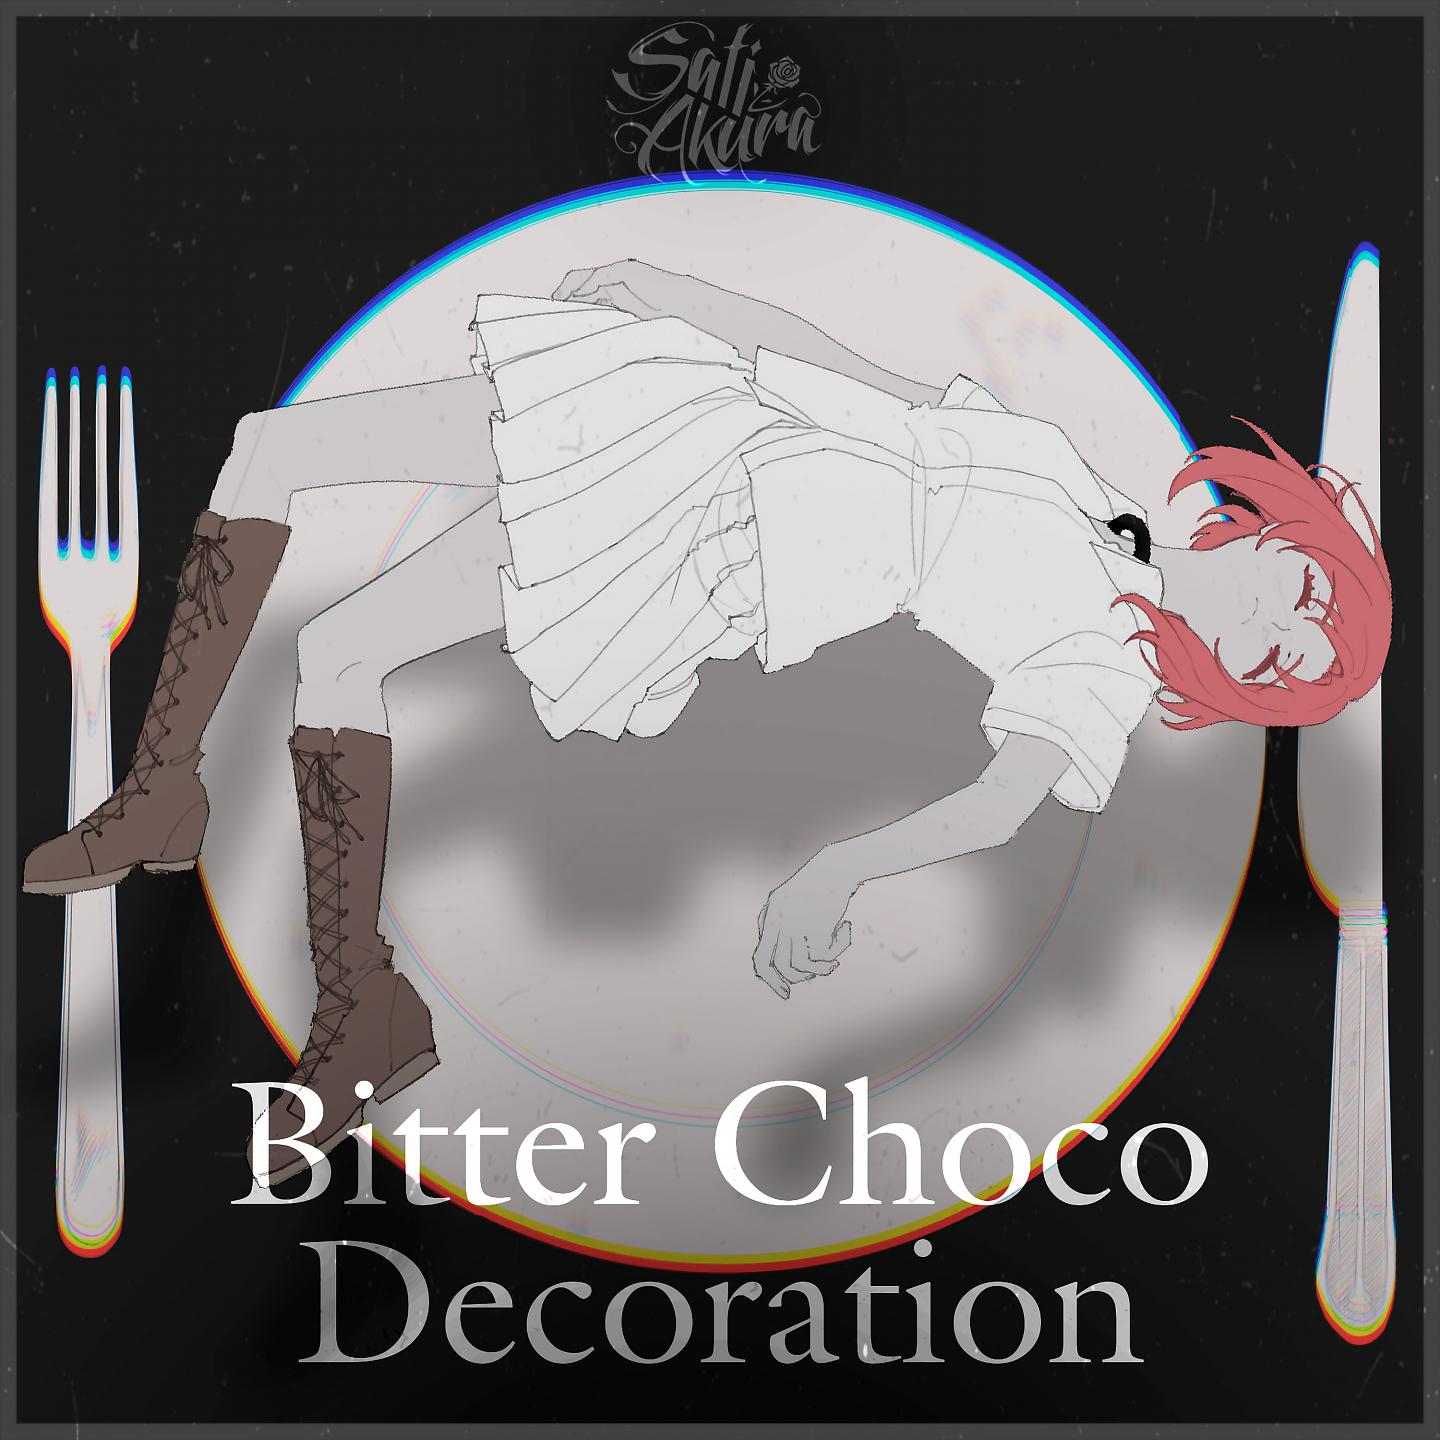 Bitter choco decoration sati